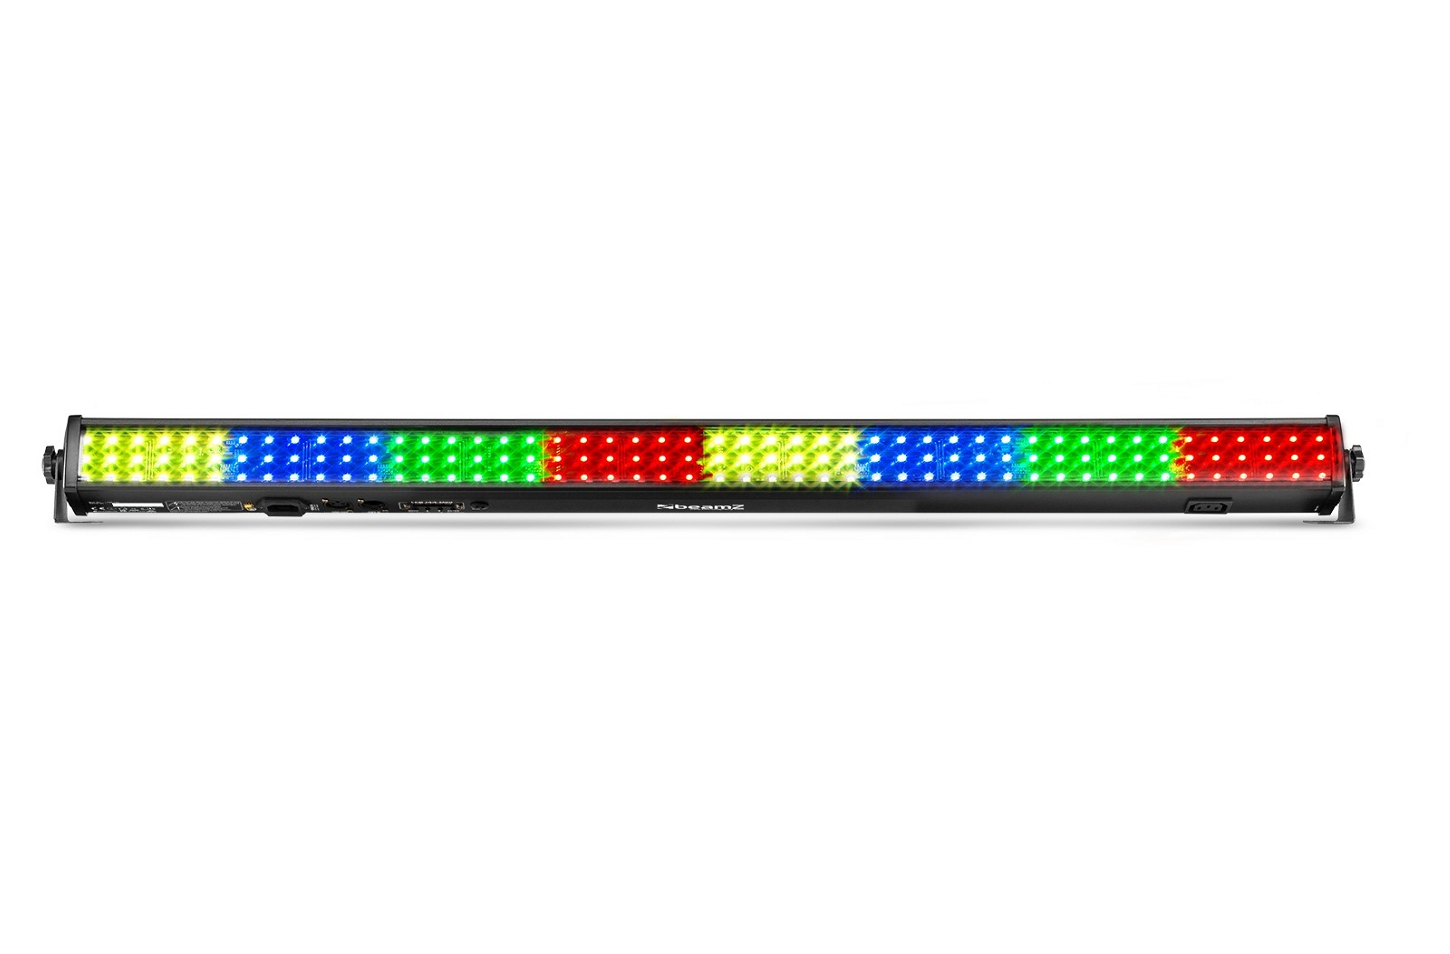  LCB144 LED Colour Bar 